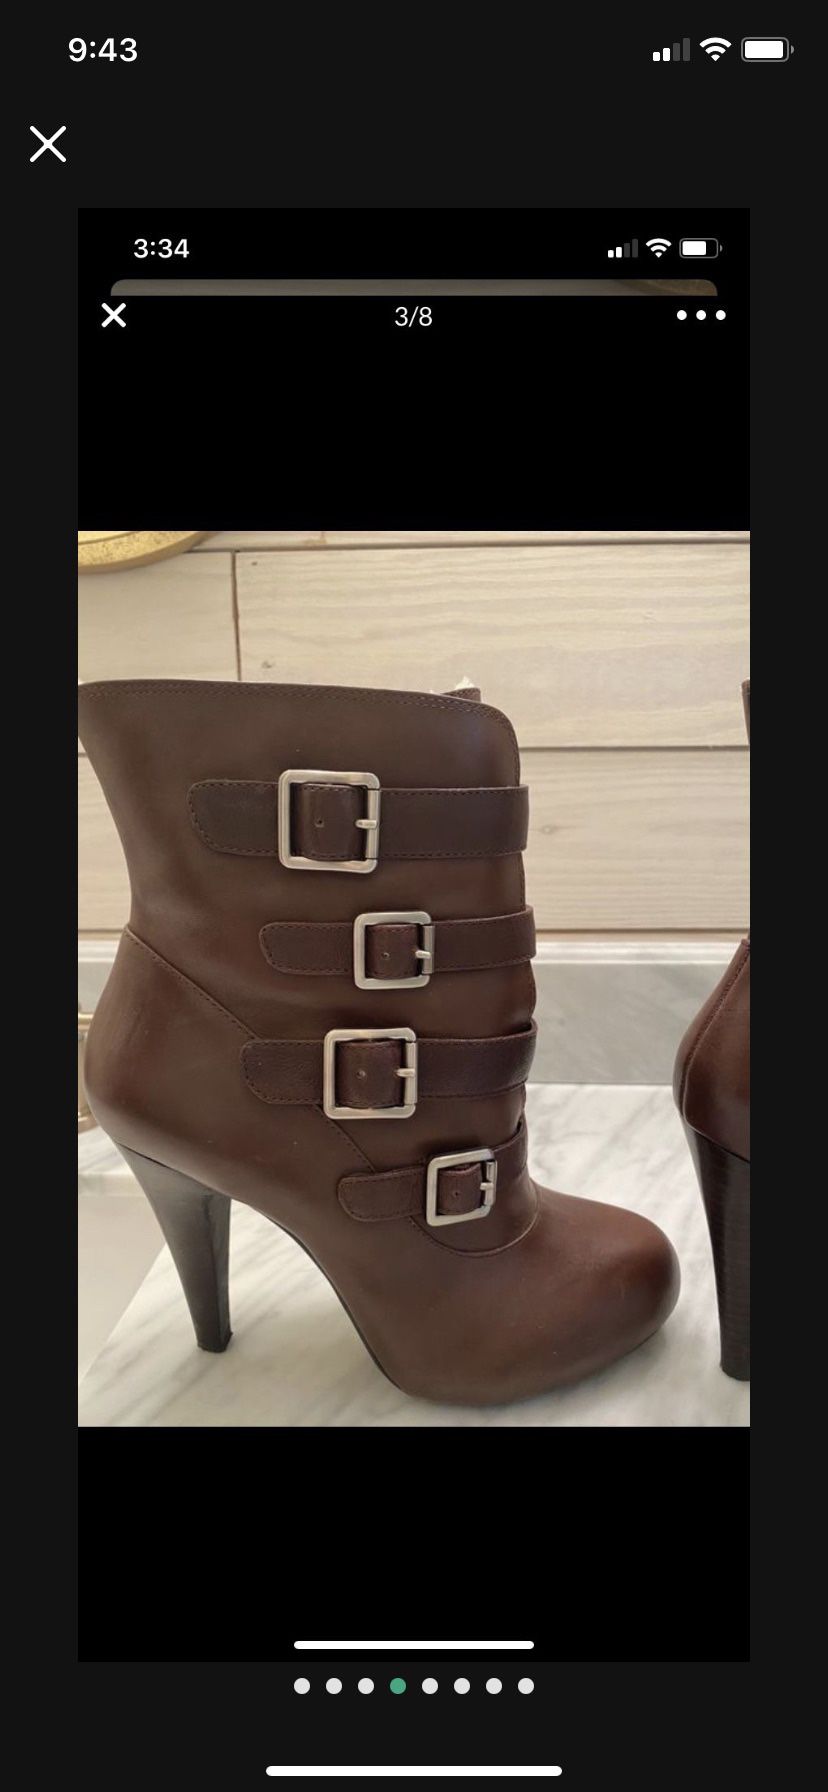 Gianni Bini Leather Boots Size 8